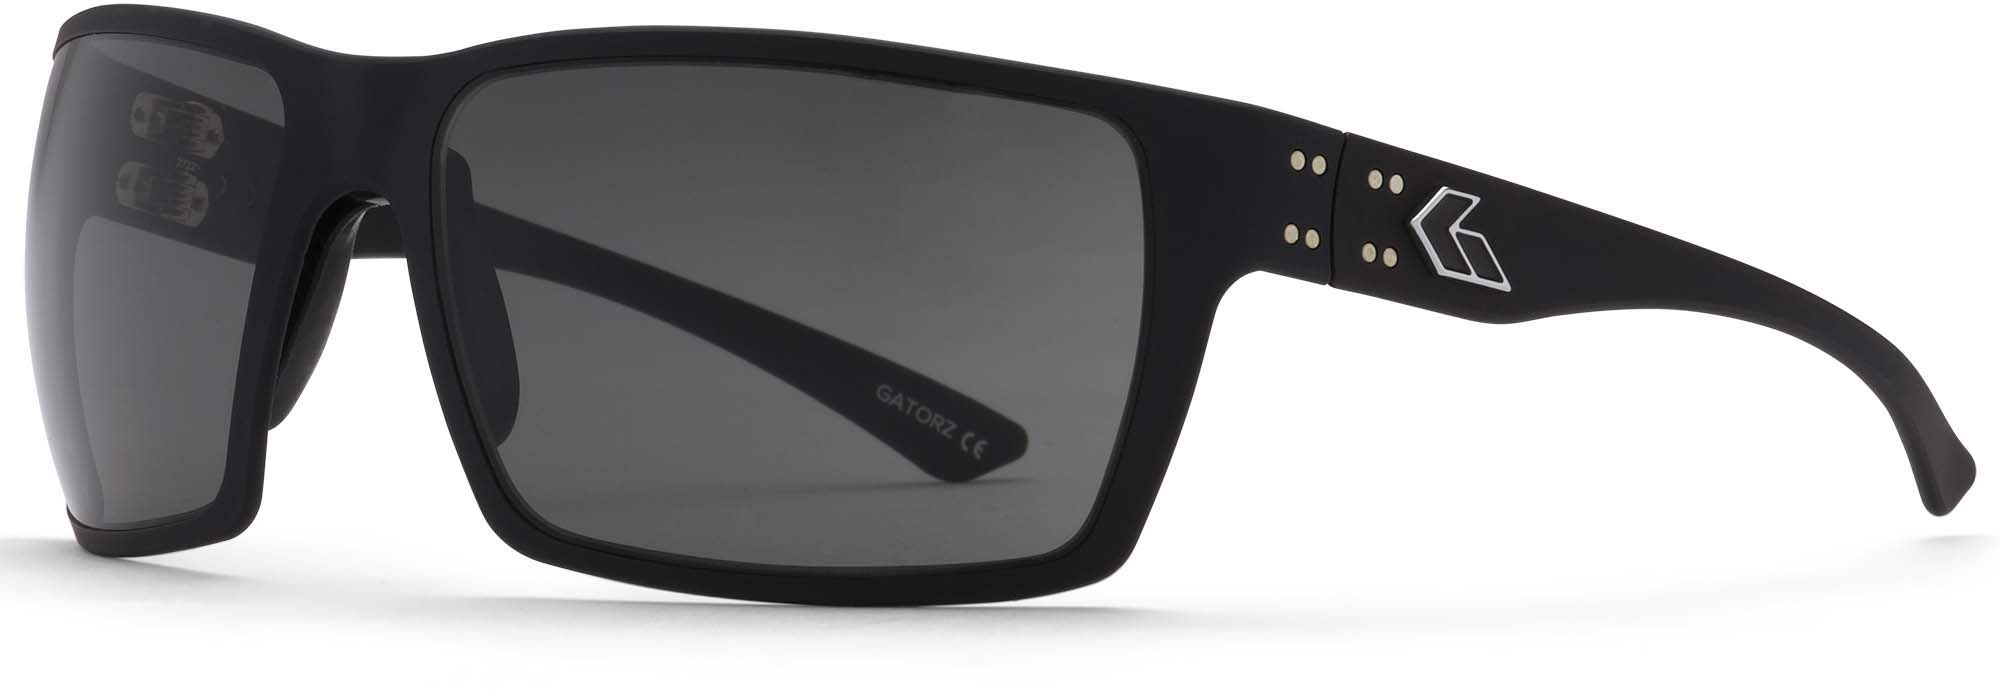 Gatorz Marauder Glasses  5 Star Rating w/ Free S&H